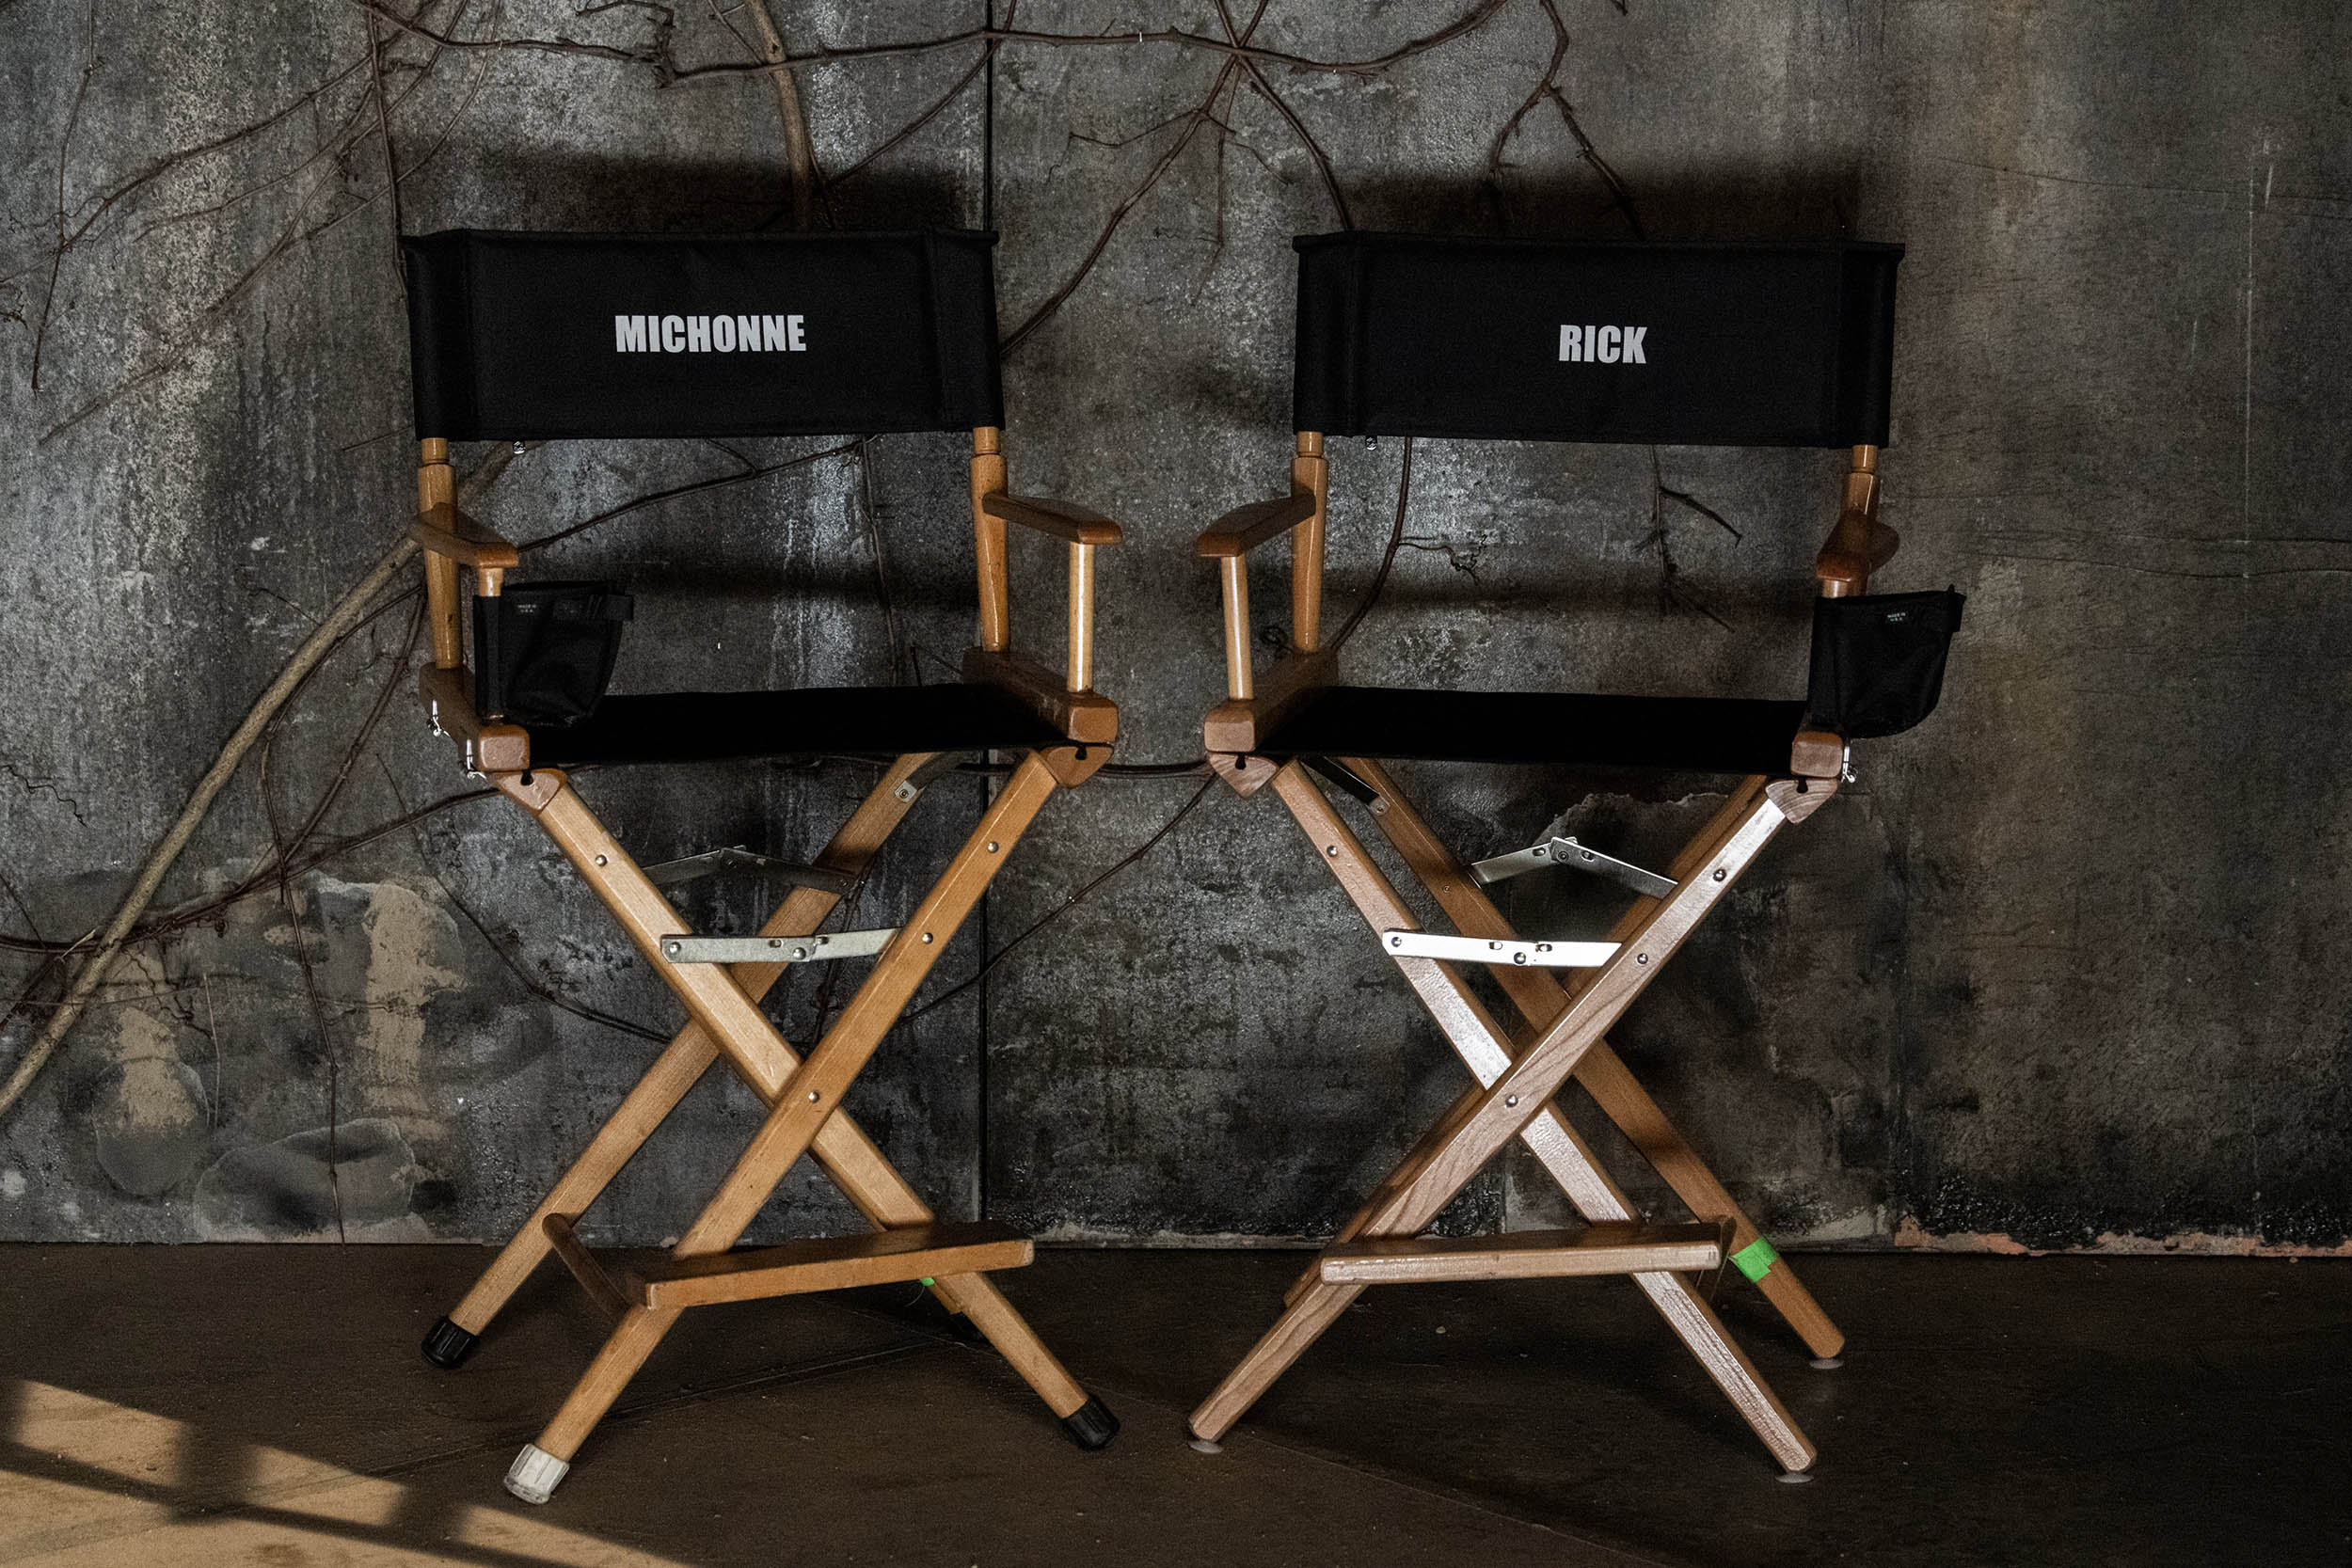 Cadeiras de Andrew Lincoln e Danai Gurira no set de The Walking Dead: Rick e Michonne.